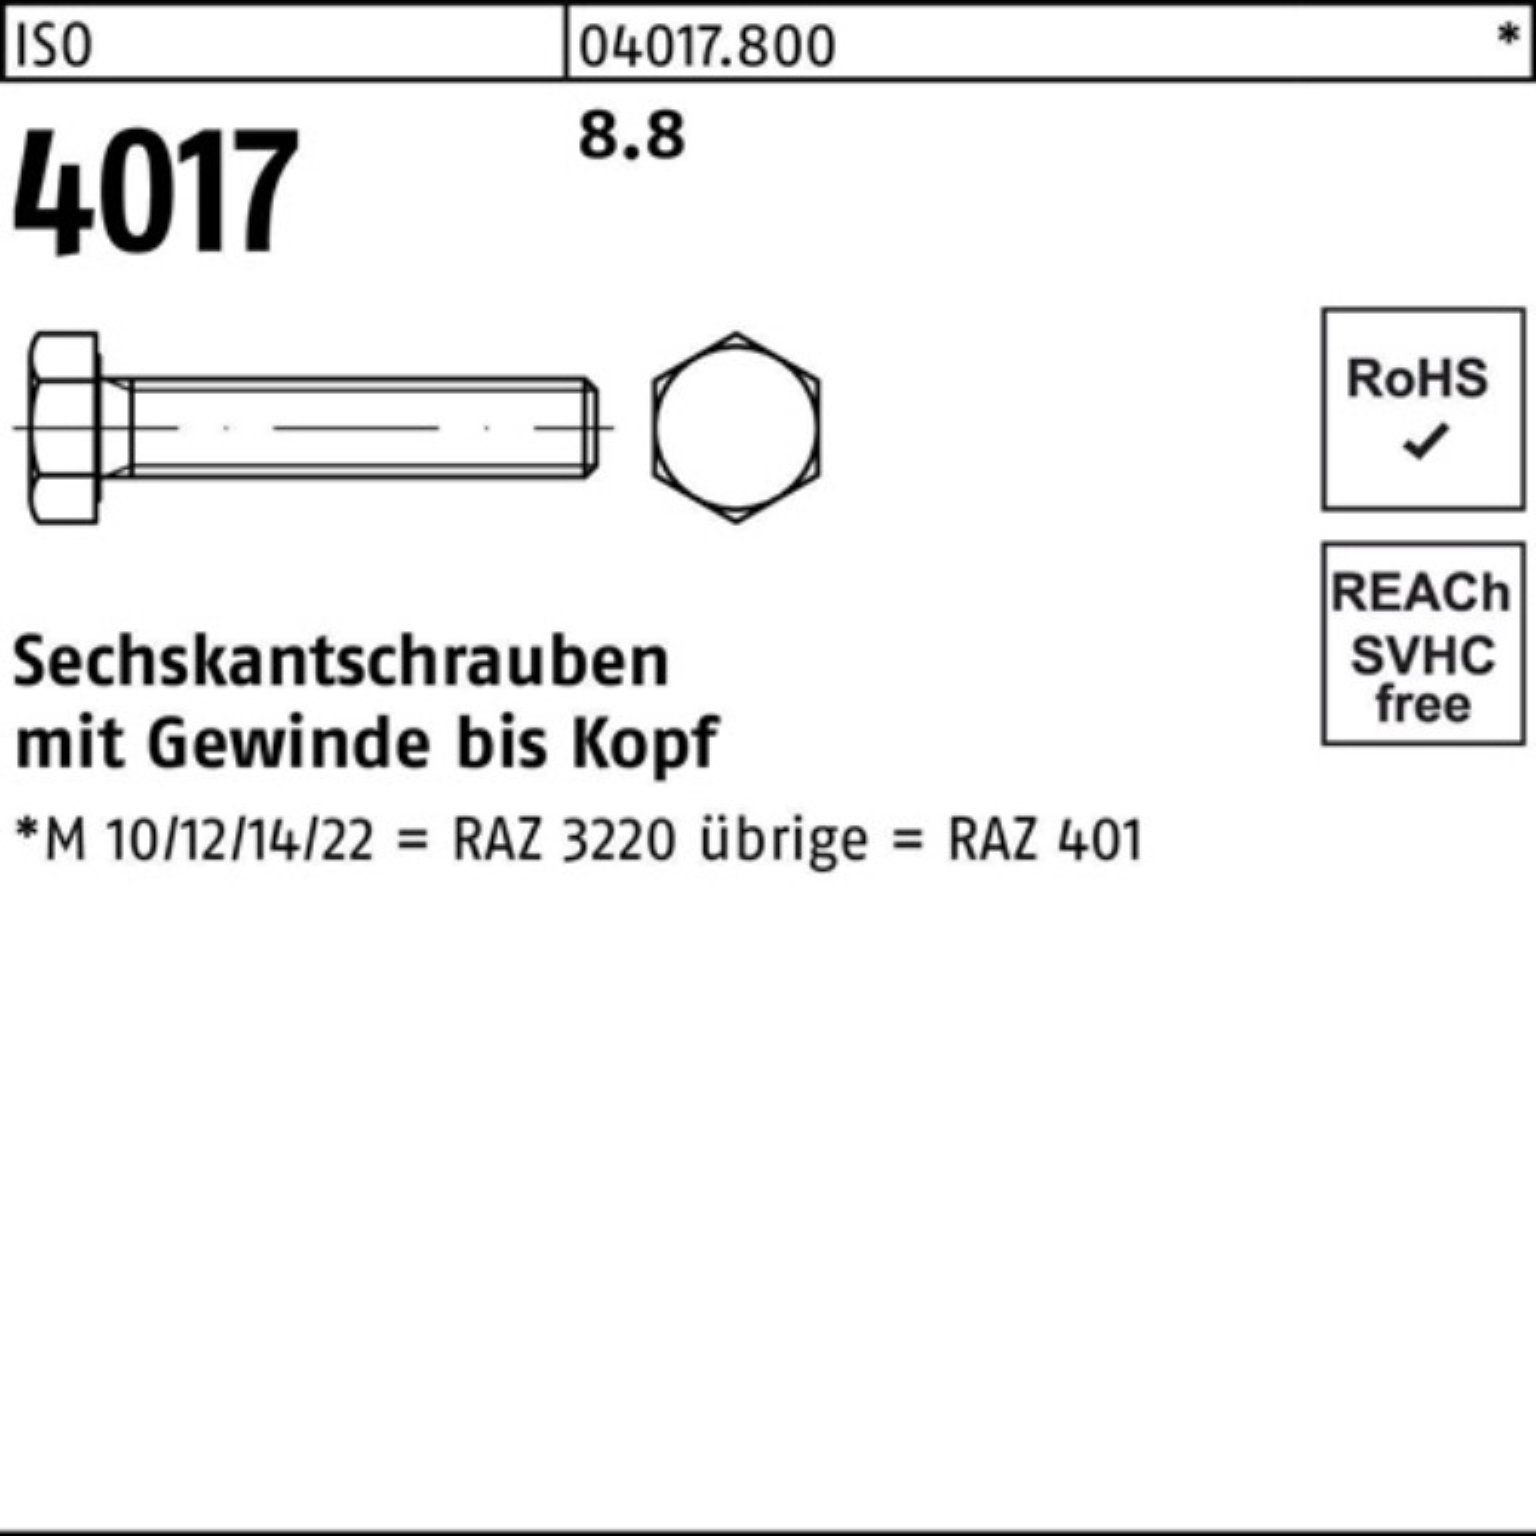 VG Sechskantschraube 8.8 401 4017 ISO 1 Sechskantschraube ISO 100er 600 Bufab Pack M36x Stück